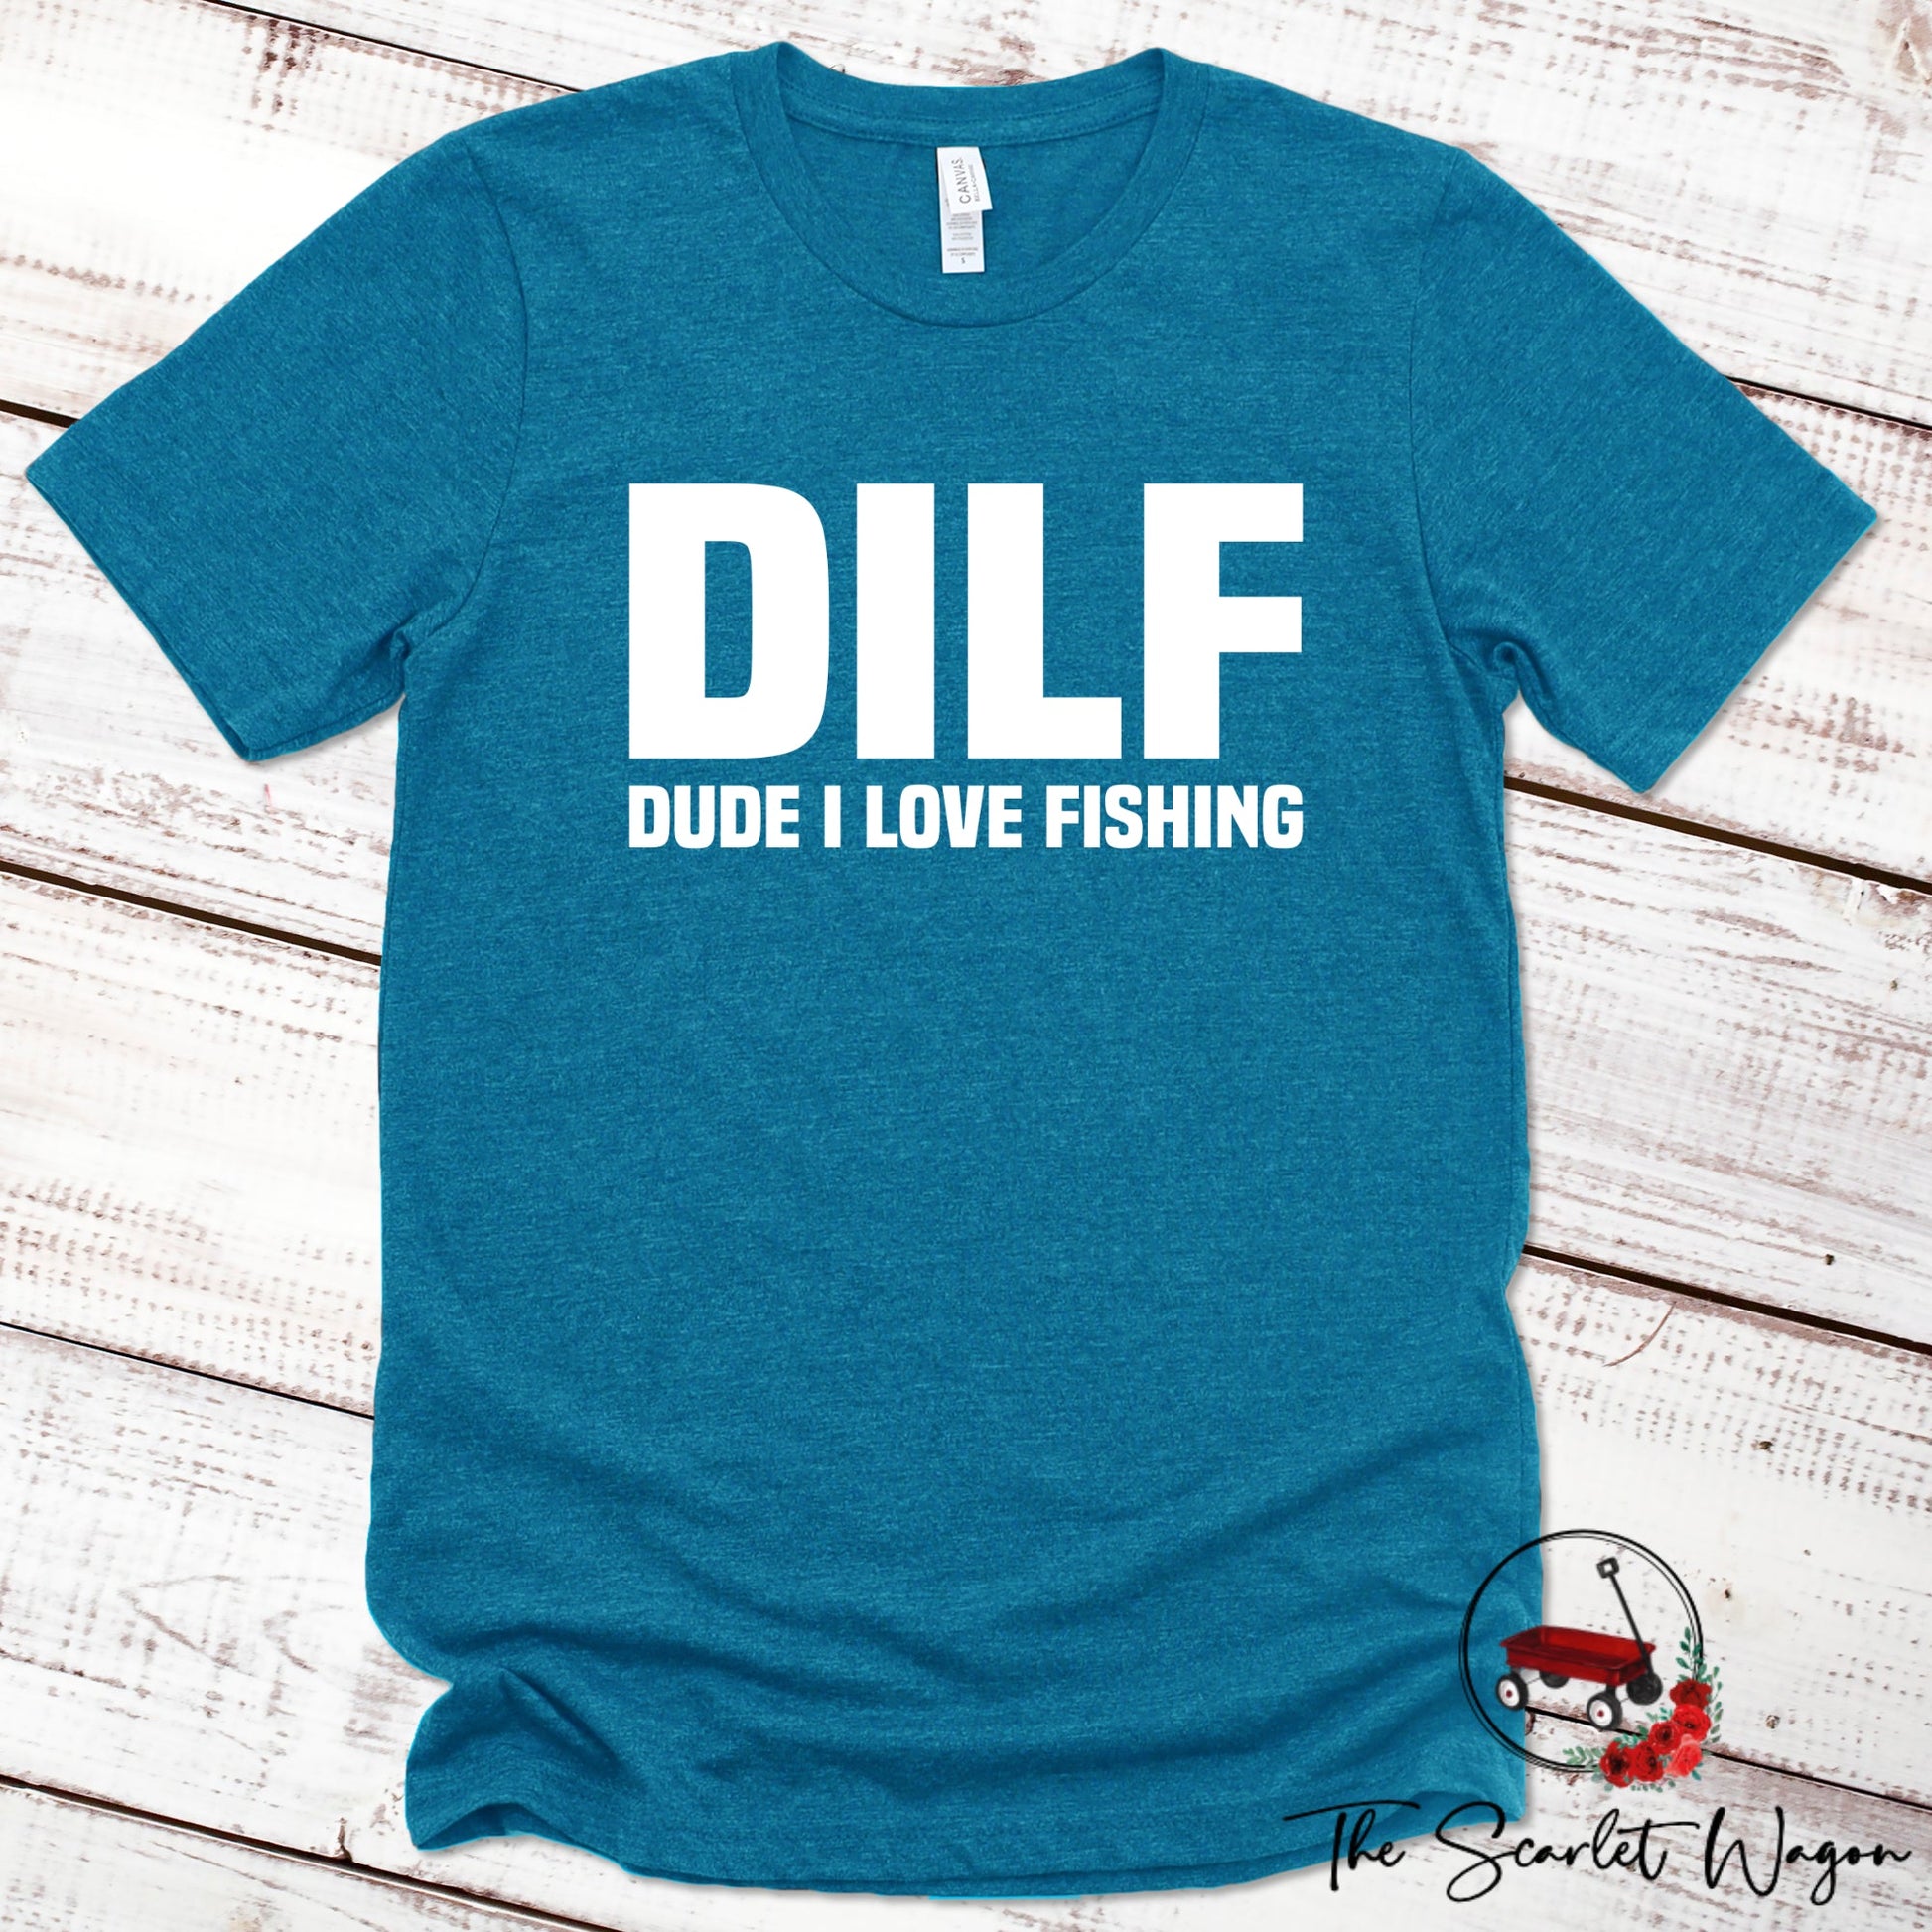 DILF - Dude I Love Fishing Premium Tee Scarlet Wagon Heather Deep Teal XS 